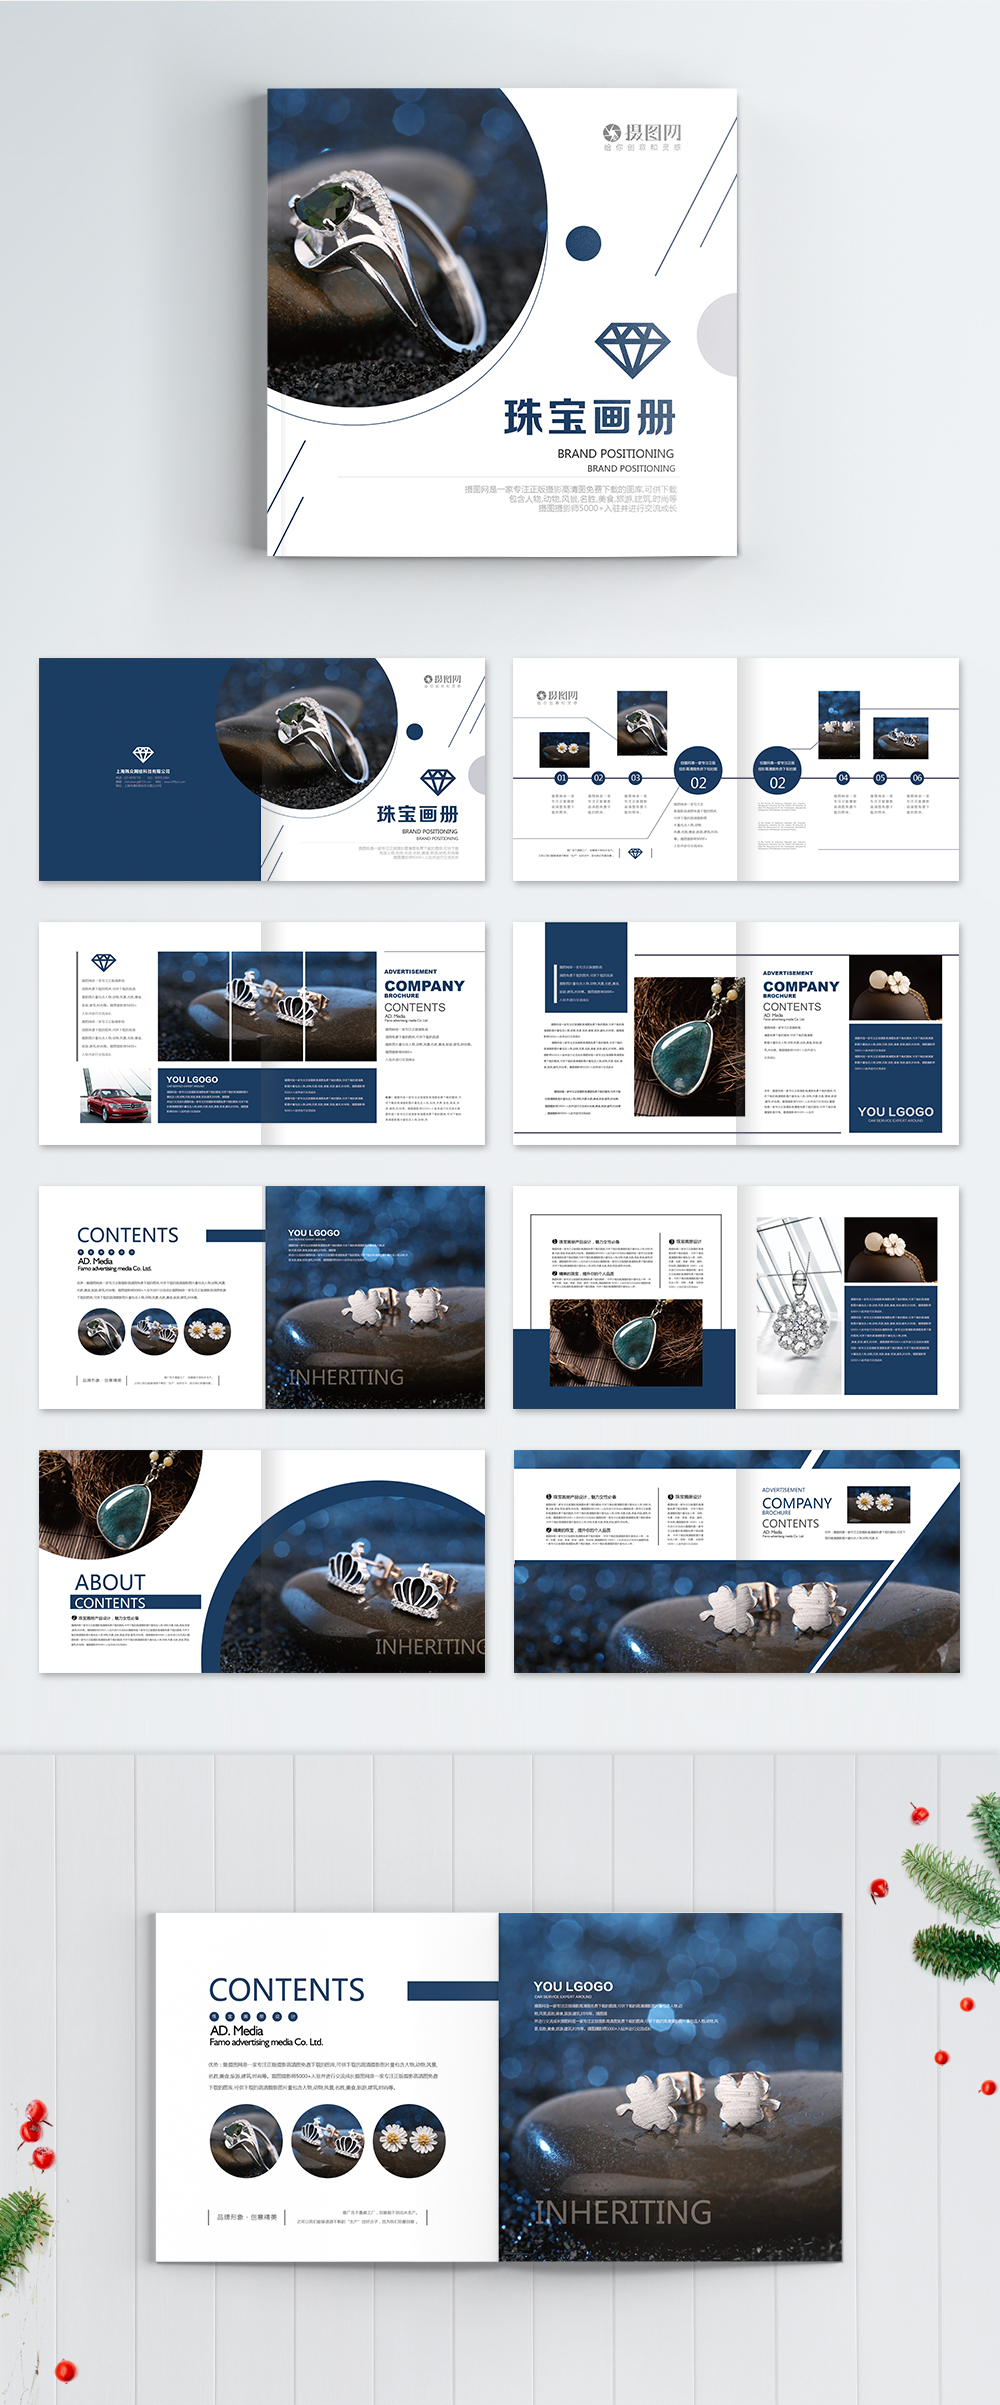 jewelry brochure design templates free download